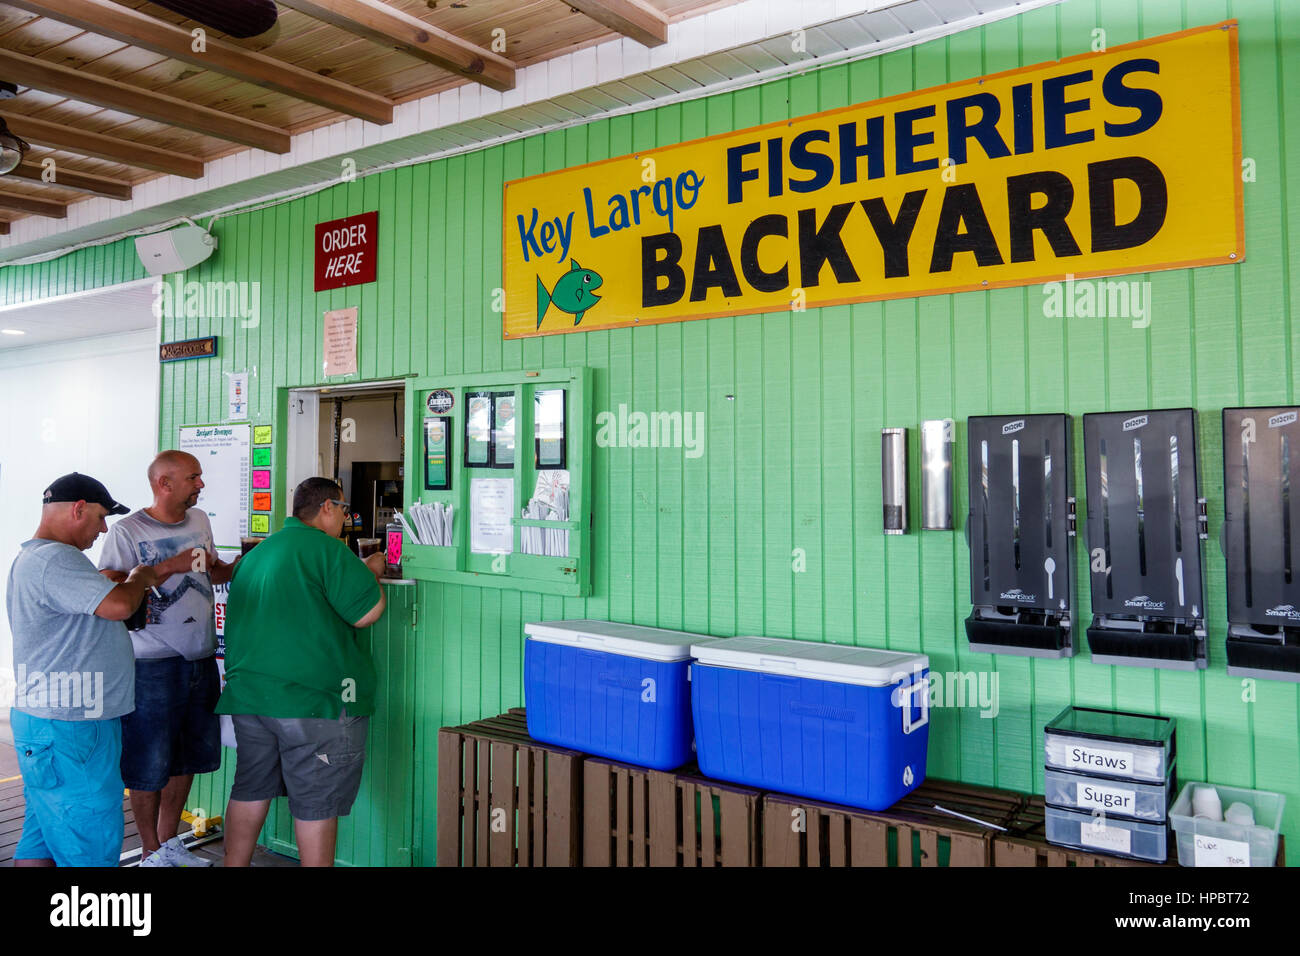 Florida Upper Key Largo Florida Keys,Key Largo Fisheries Backyard,restaurant restaurants food dining cafe cafes,seafood market,waterfront,order window Stock Photo